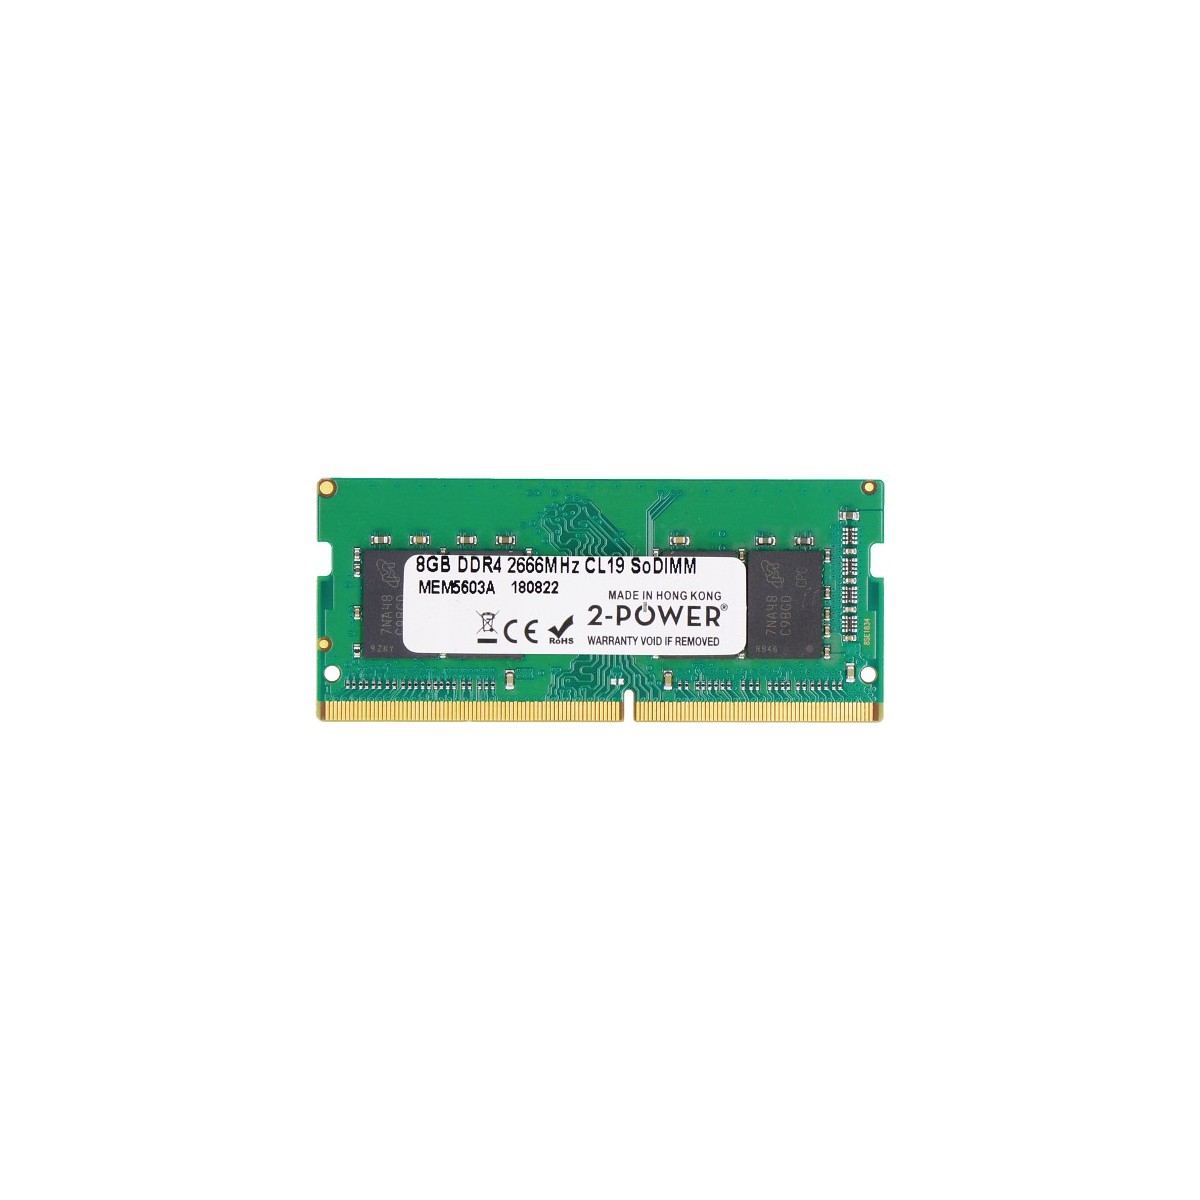 HP GNRC-Sodimm 8Gb 2666MHz 1.2v D 937236-850 - 8 GB - DDR4